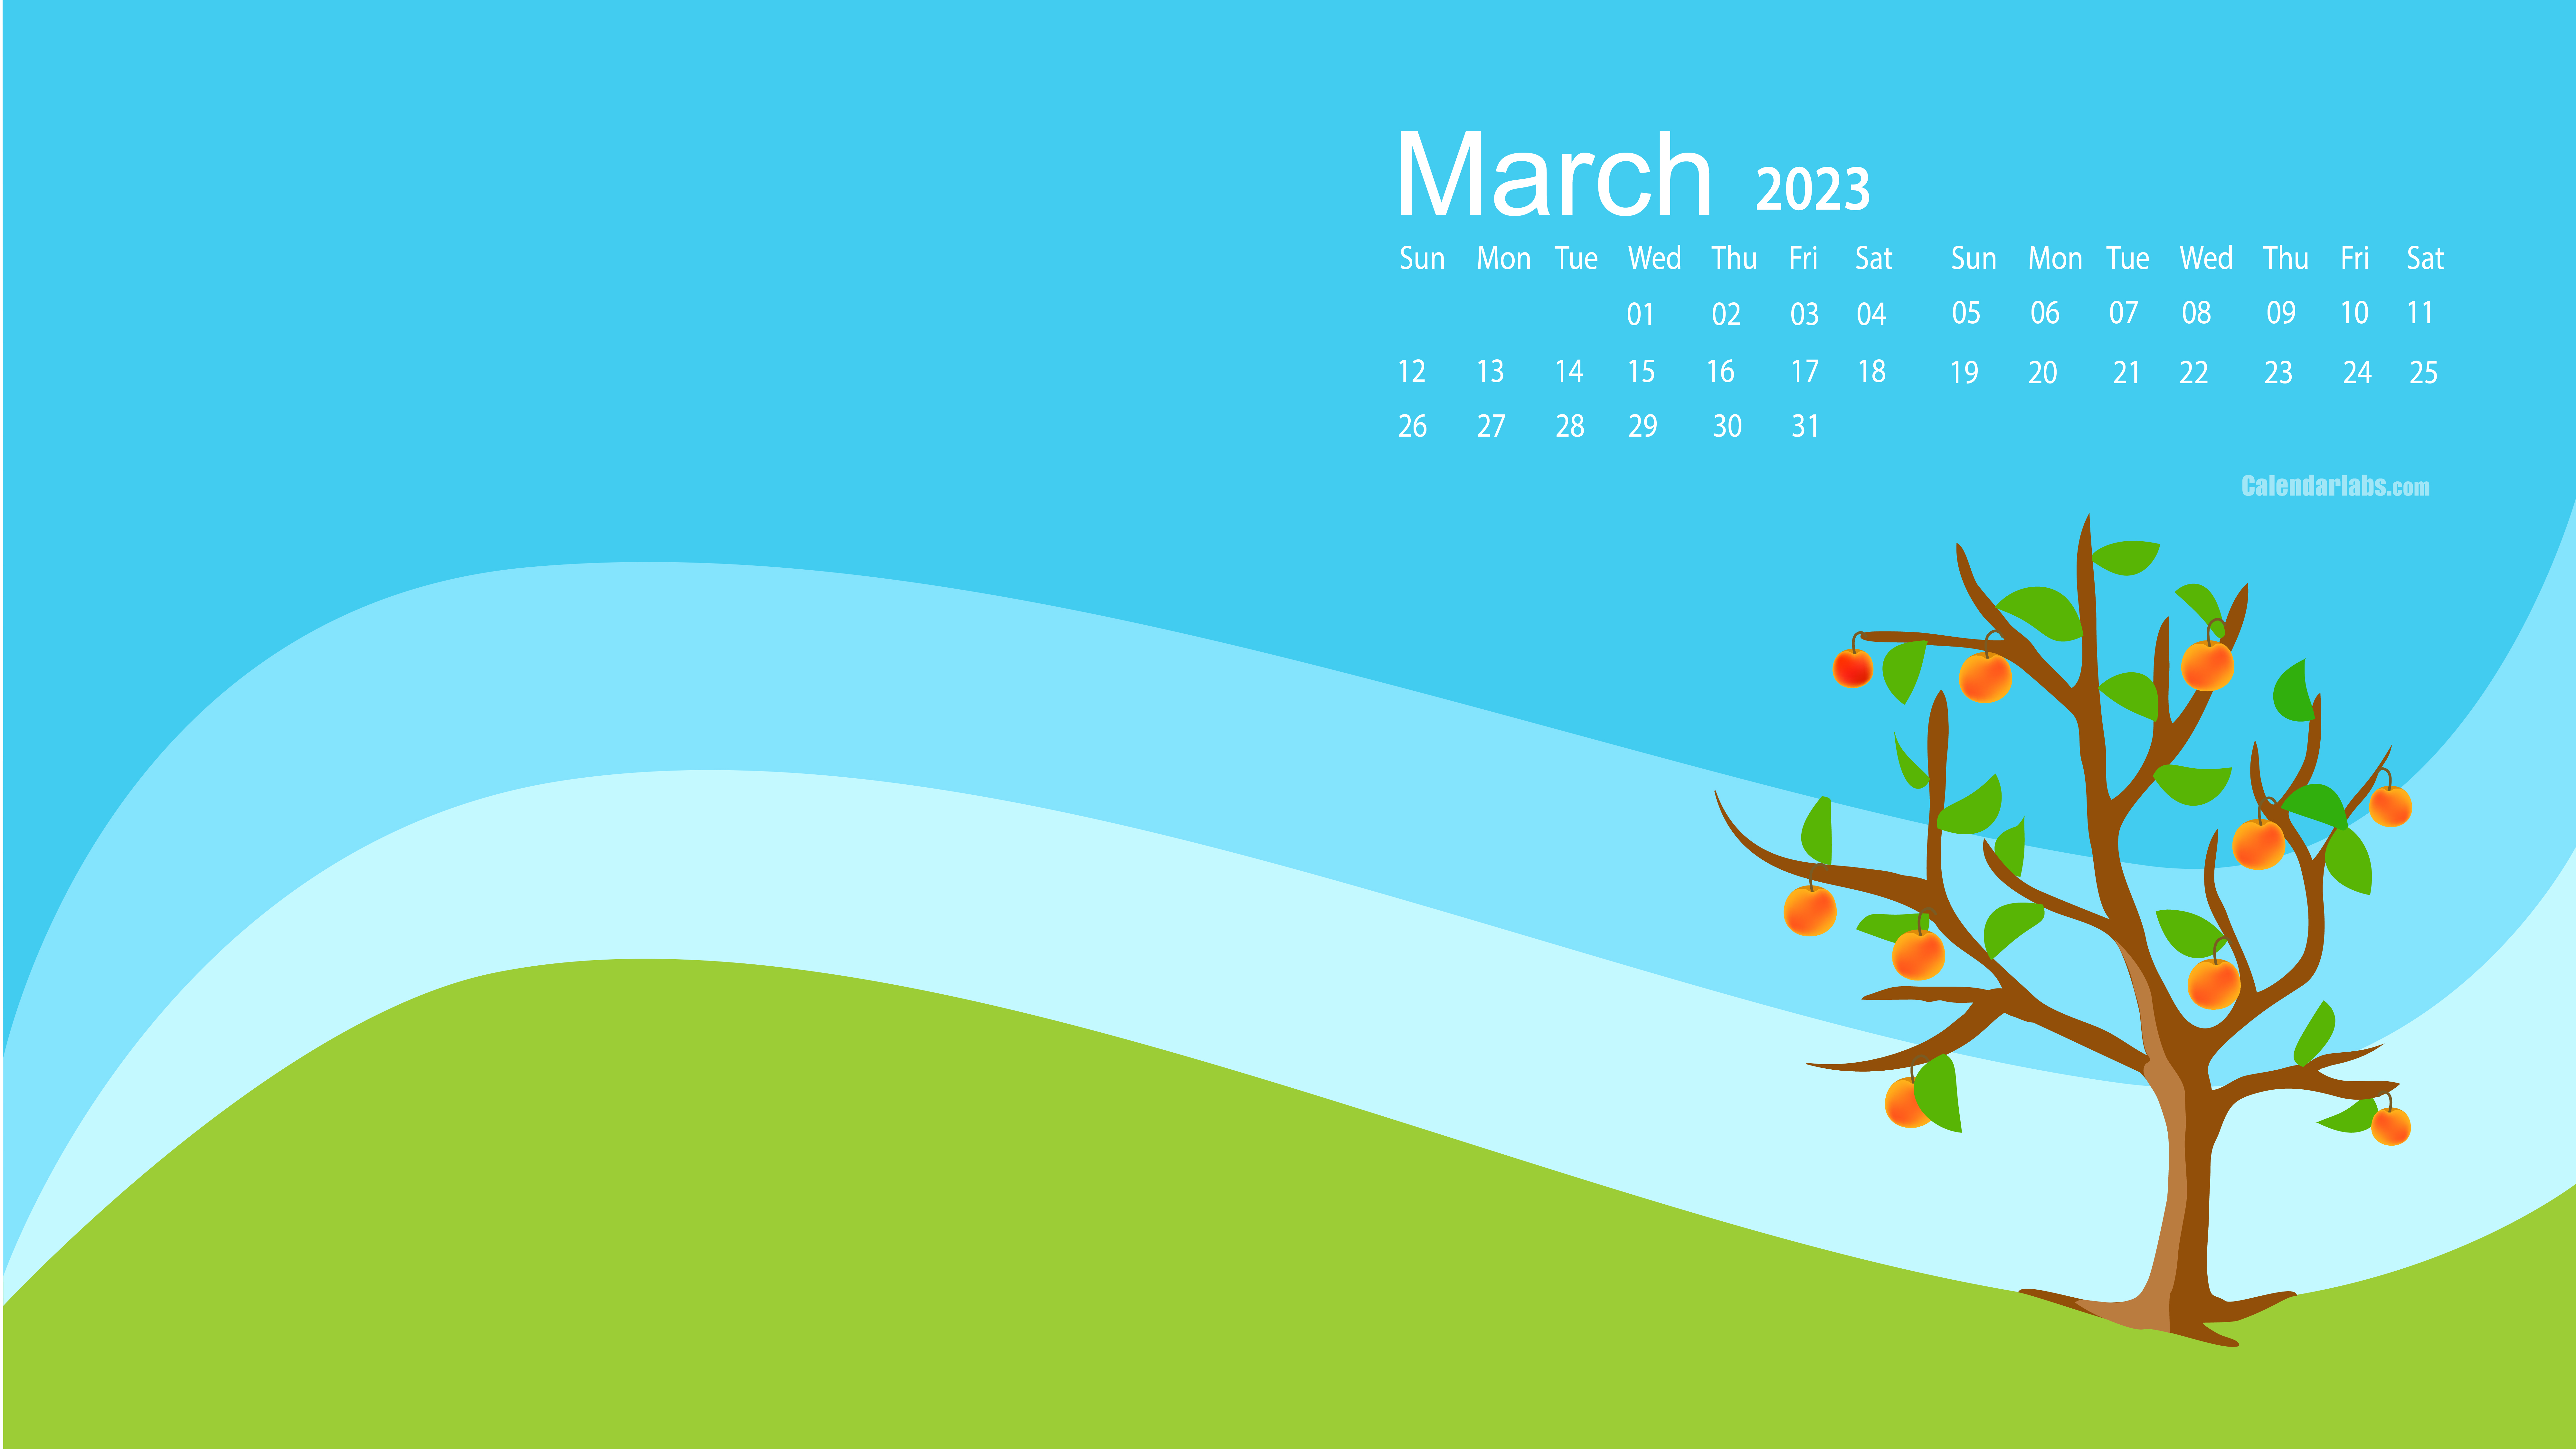 March 2023 Calendar Wallpaper  TubeWP